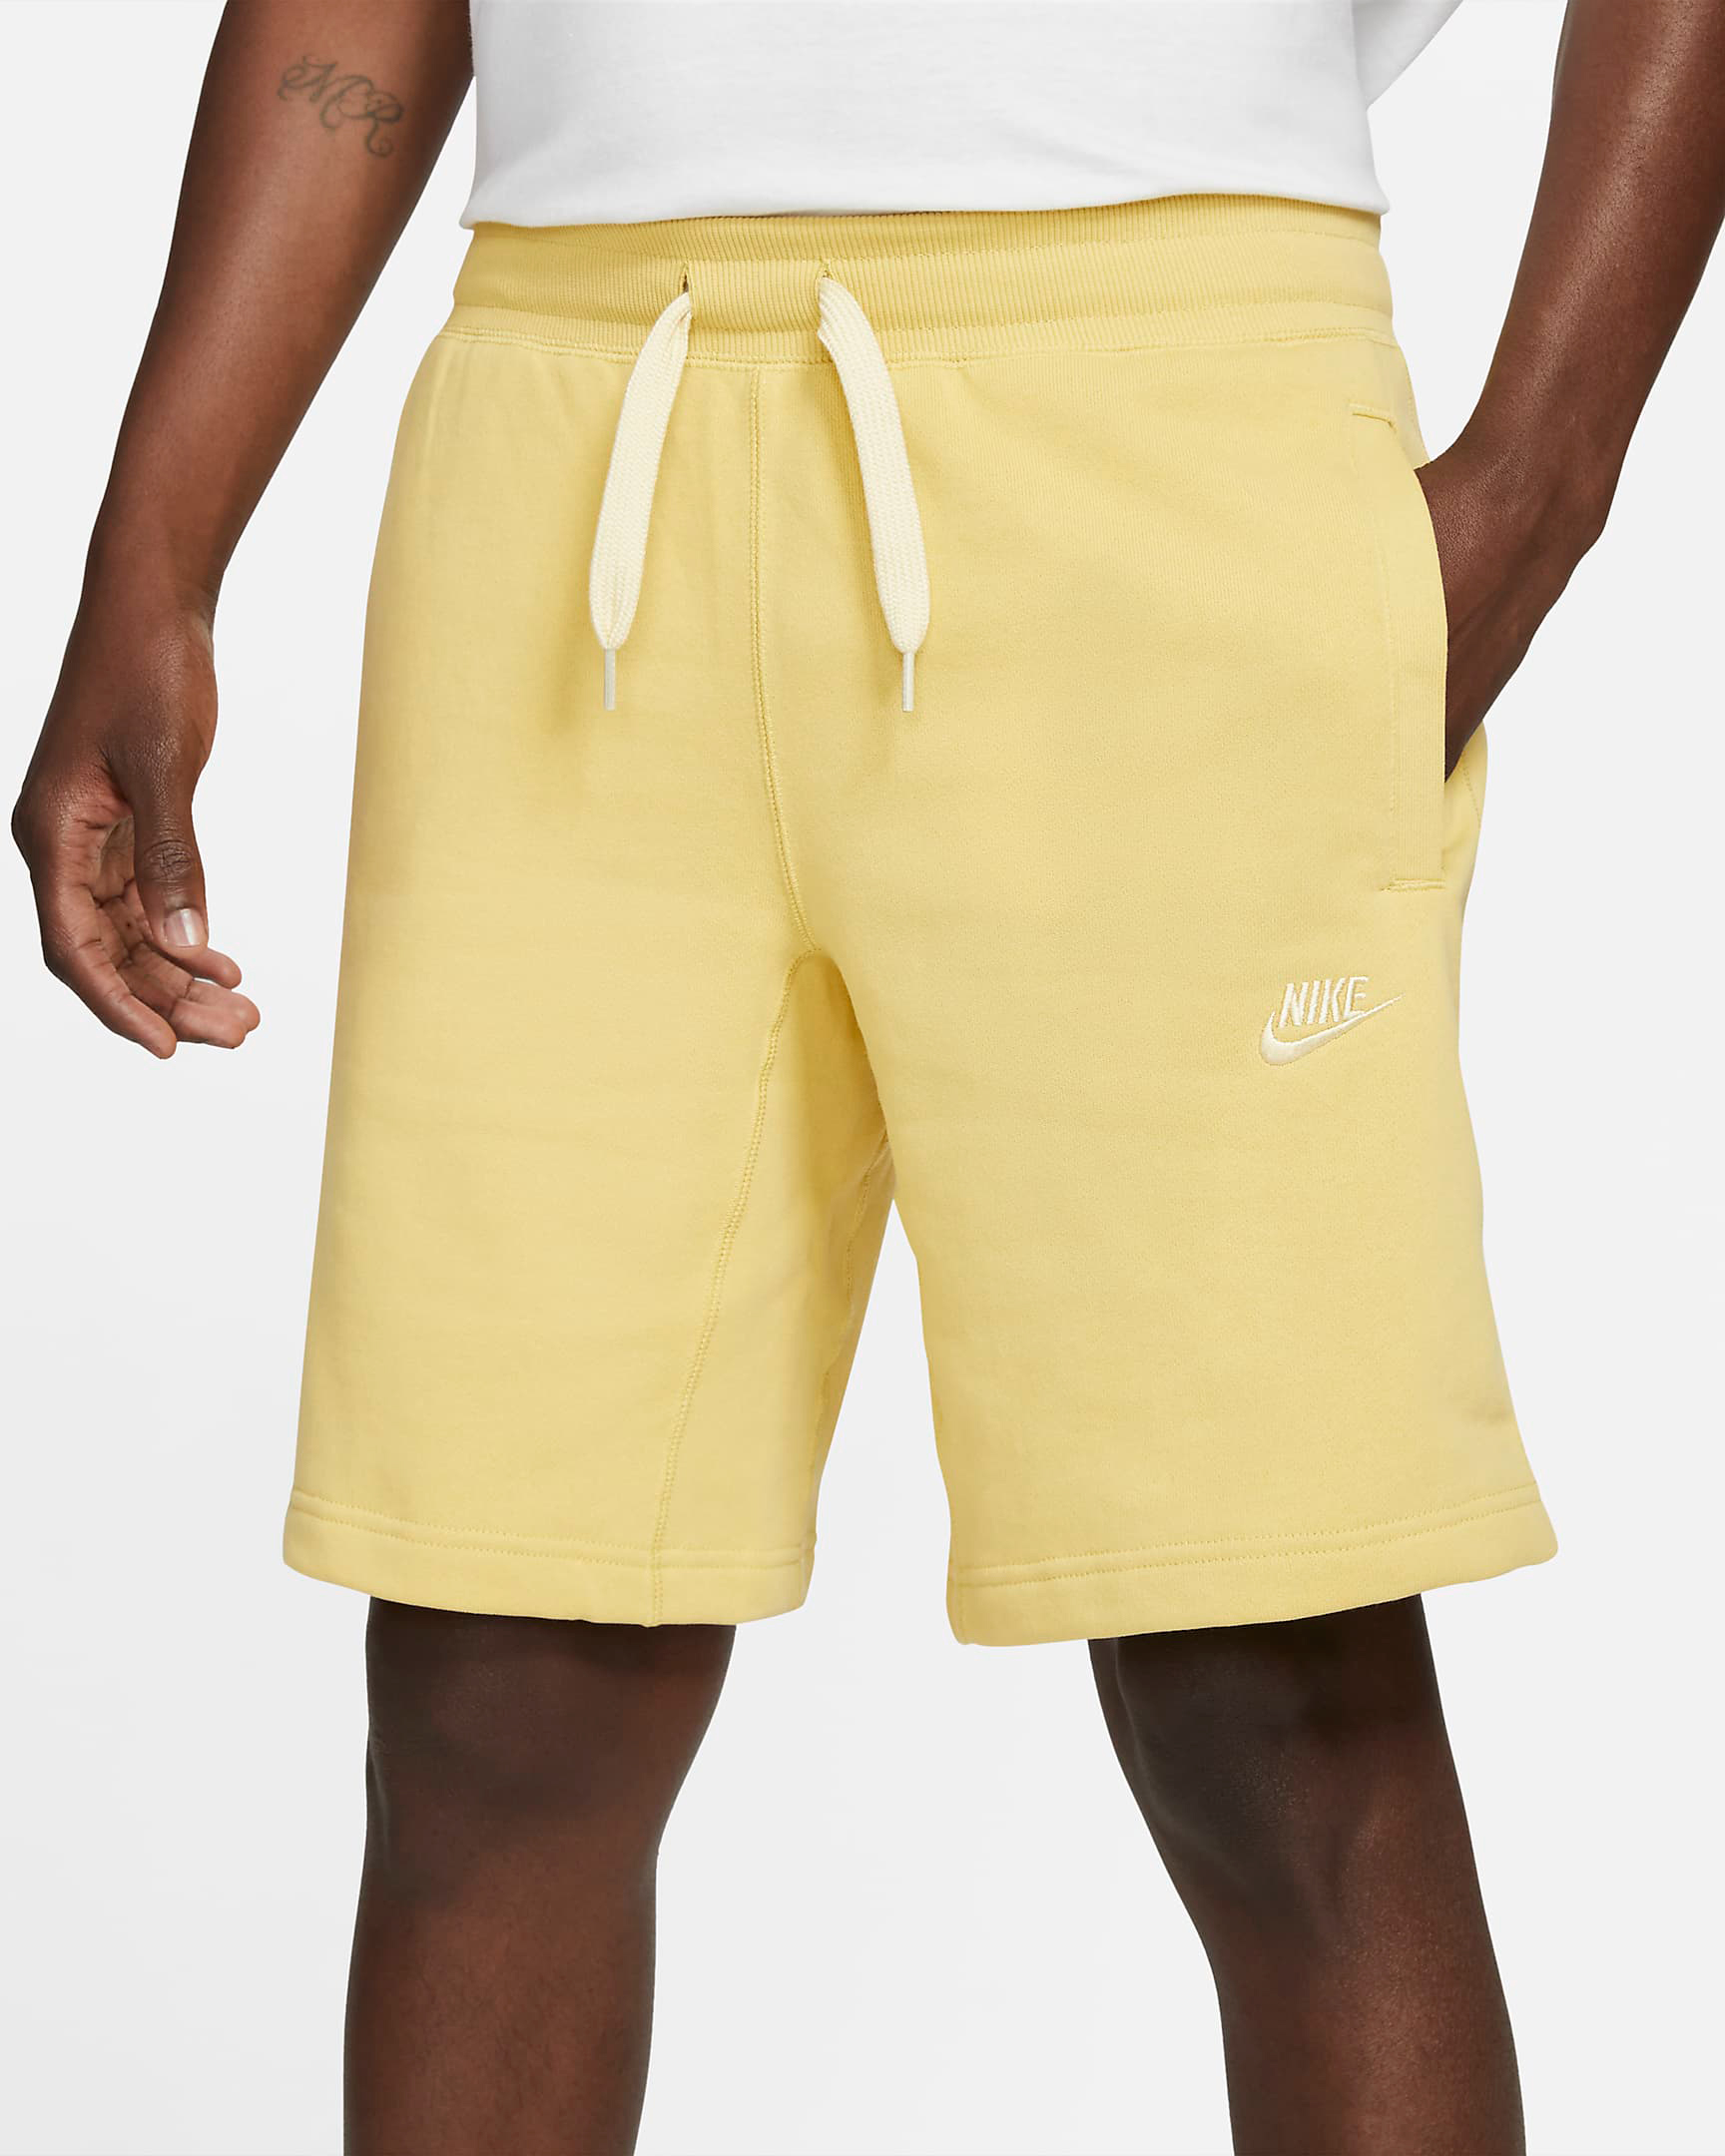 nike-saturn-gold-classic-fleece-shorts